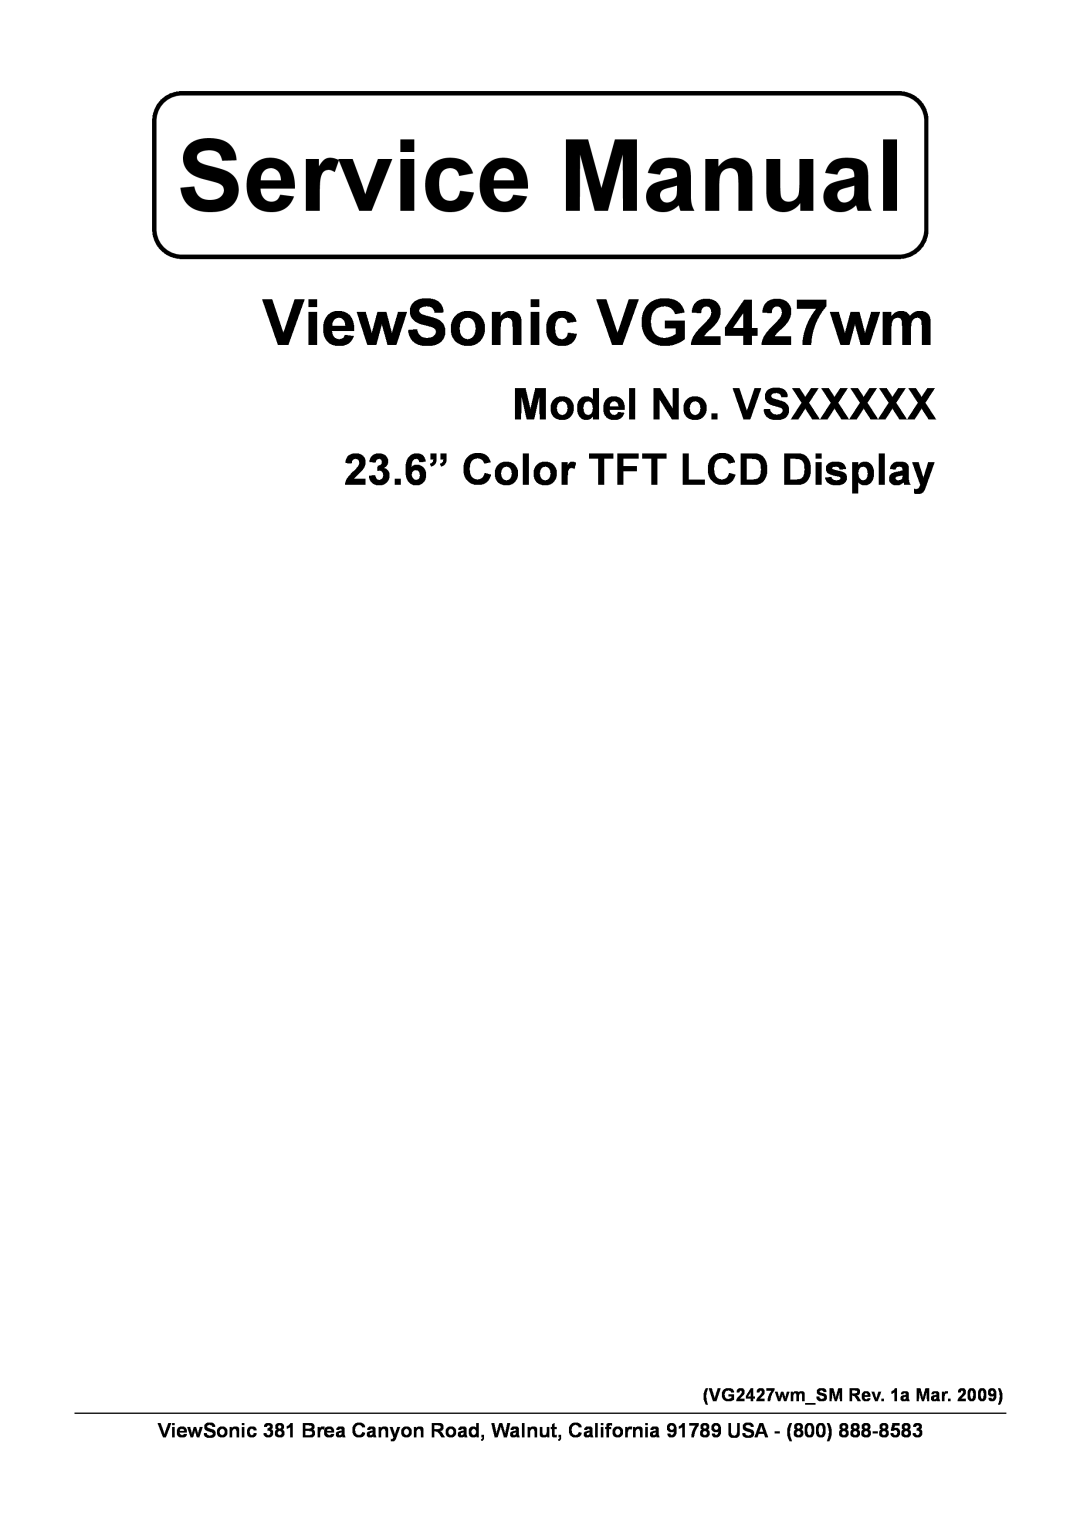 ViewSonic service manual Model No. VSXXXXX 23.6” Color TFT LCD Display, Service Manual, ViewSonic VG2427wm 